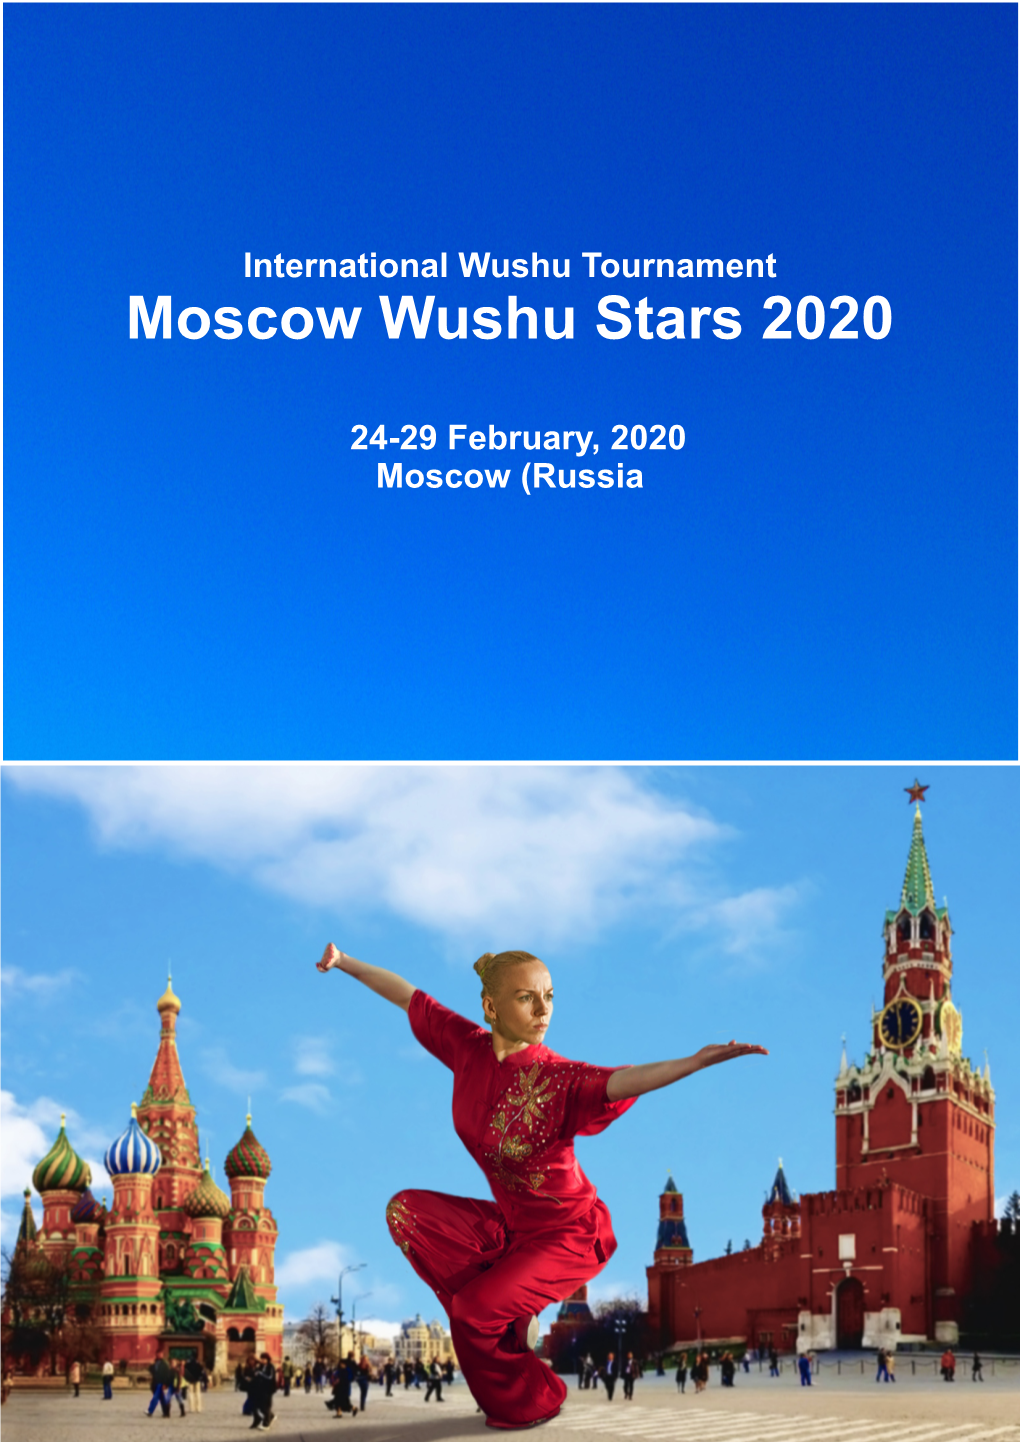 Moscow Wushu Stars 2020